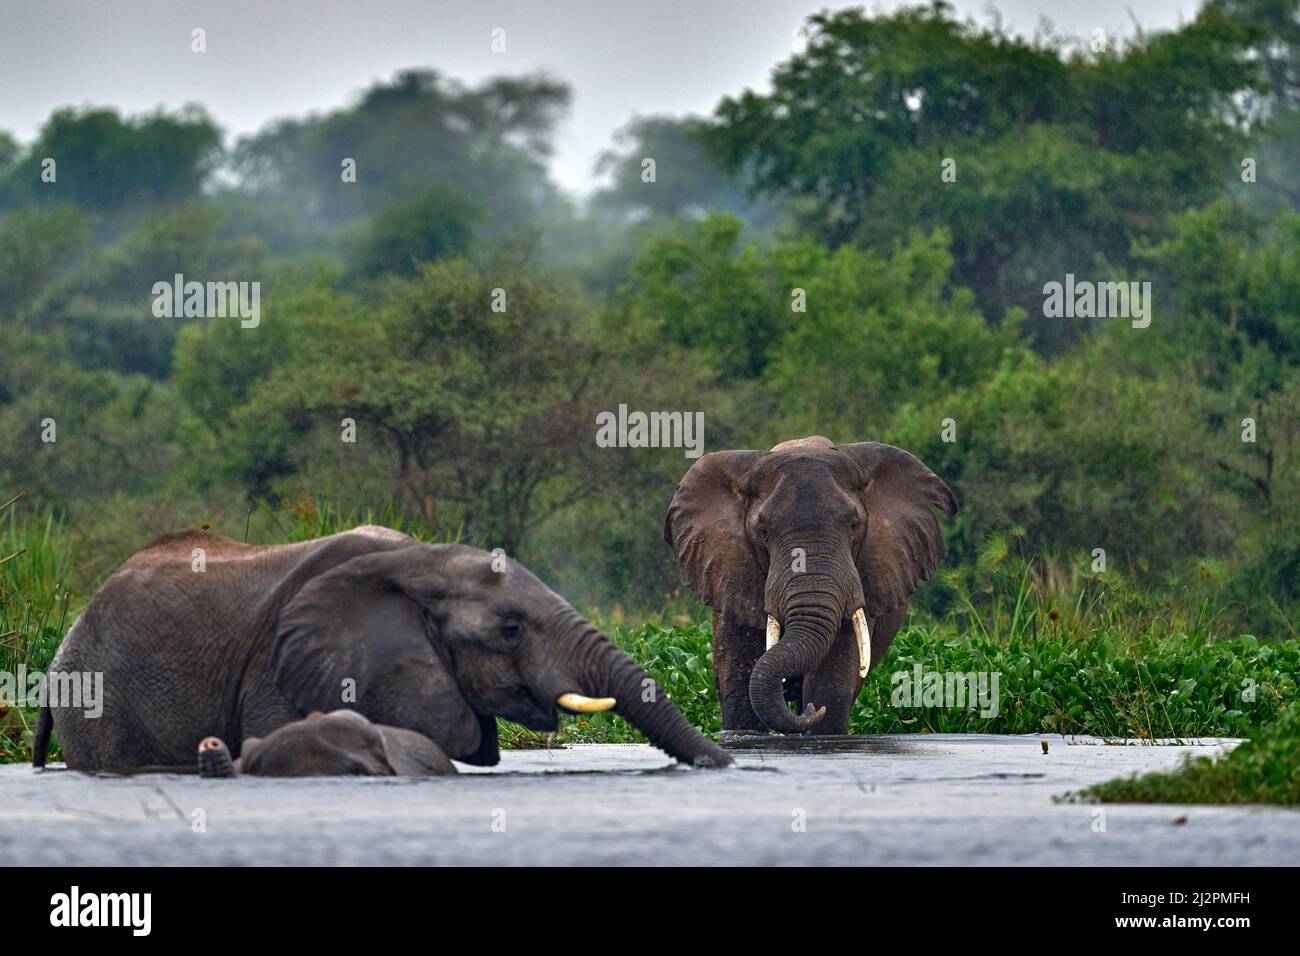 Elefant im Regen, Victoria Nil Delta. Elefant im Murchison Falls NP, Uganda. Großes Säugetier im grünen Gras, Waldvegetation. Elefantenwanderung Stockfoto